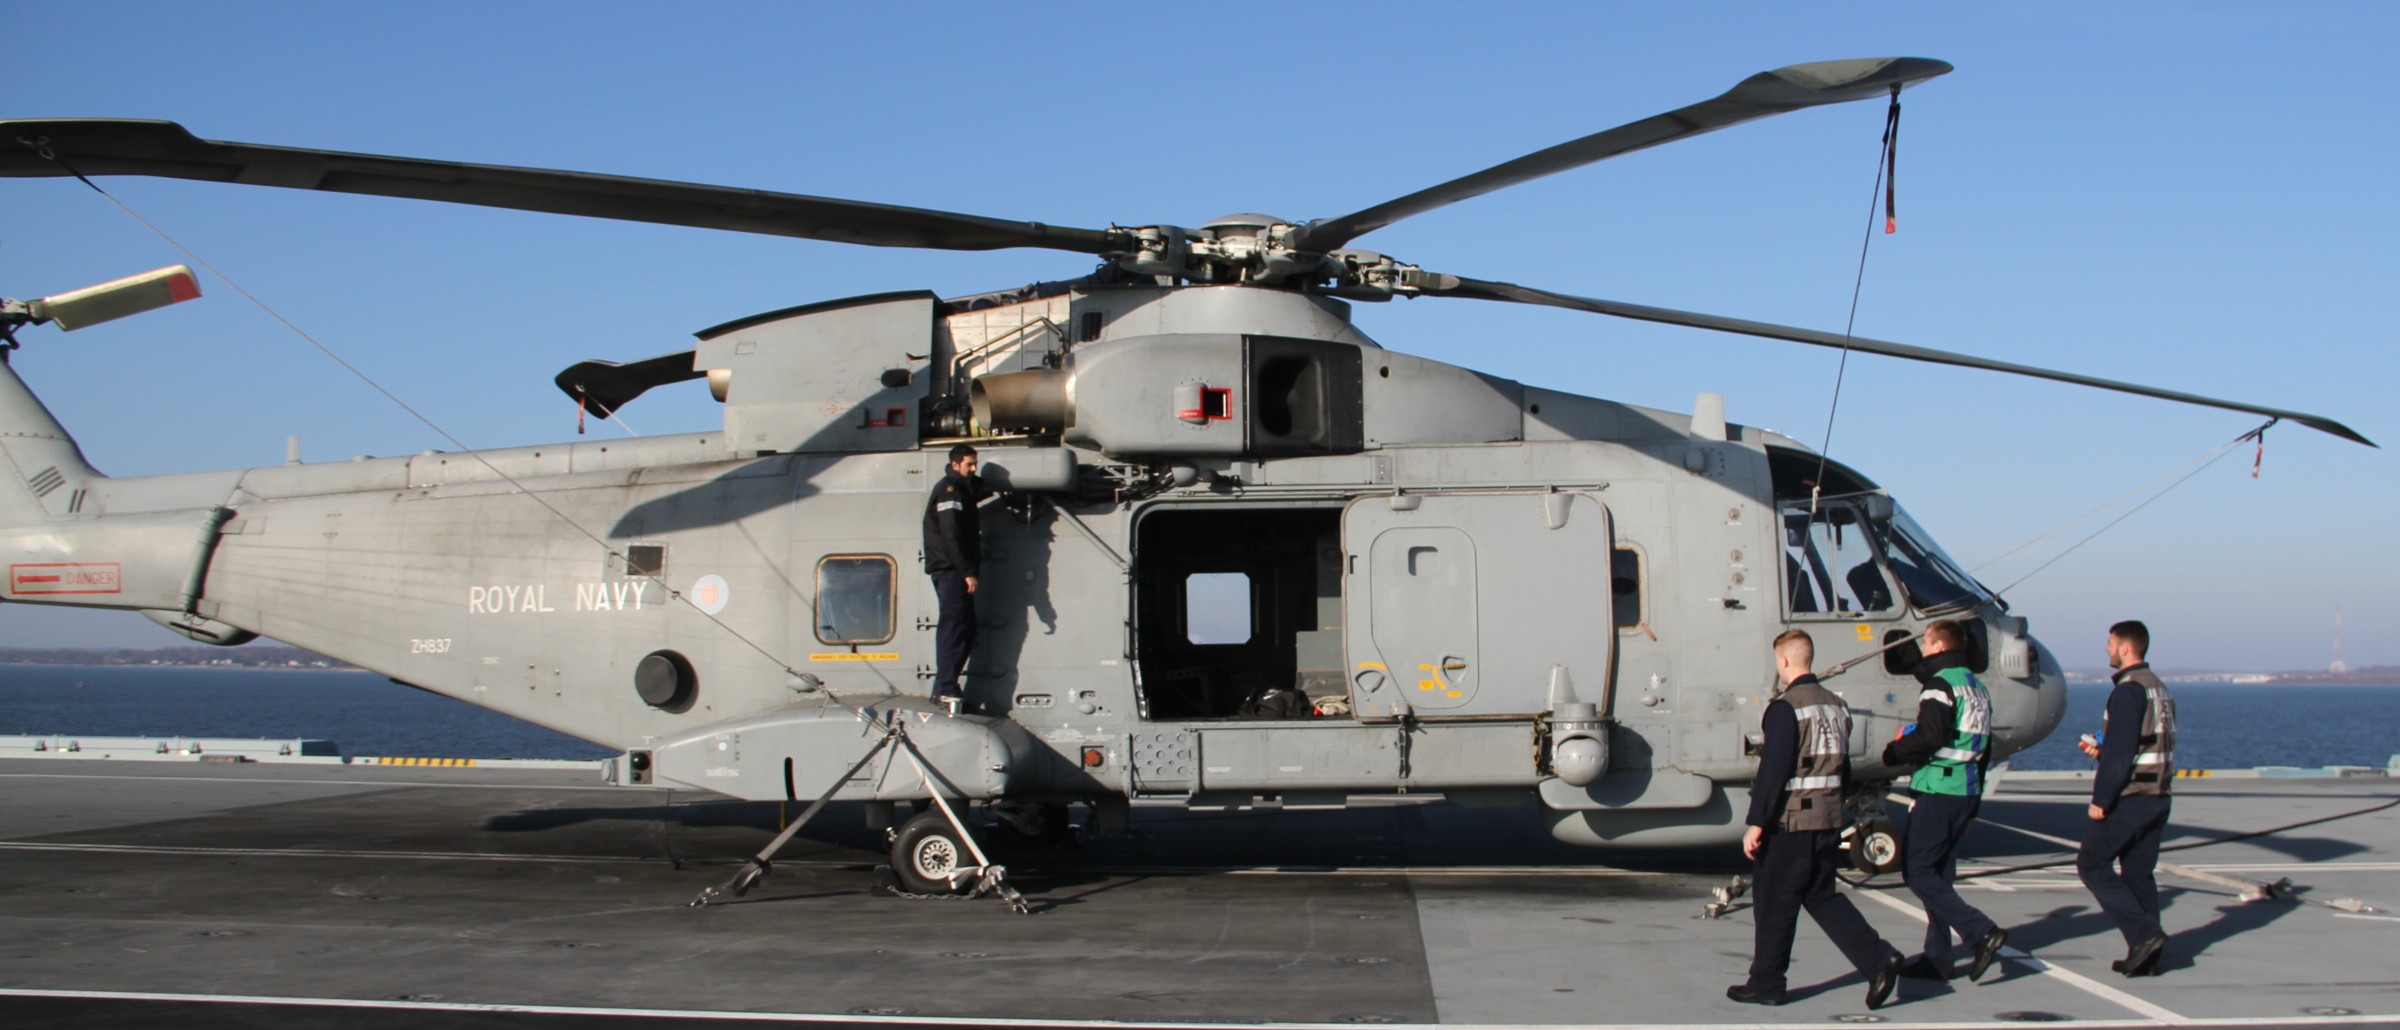 merlin hm2 helicopter royal navy agusta westland aw101 leonardo naval air squadron nas rnas culdrose 68